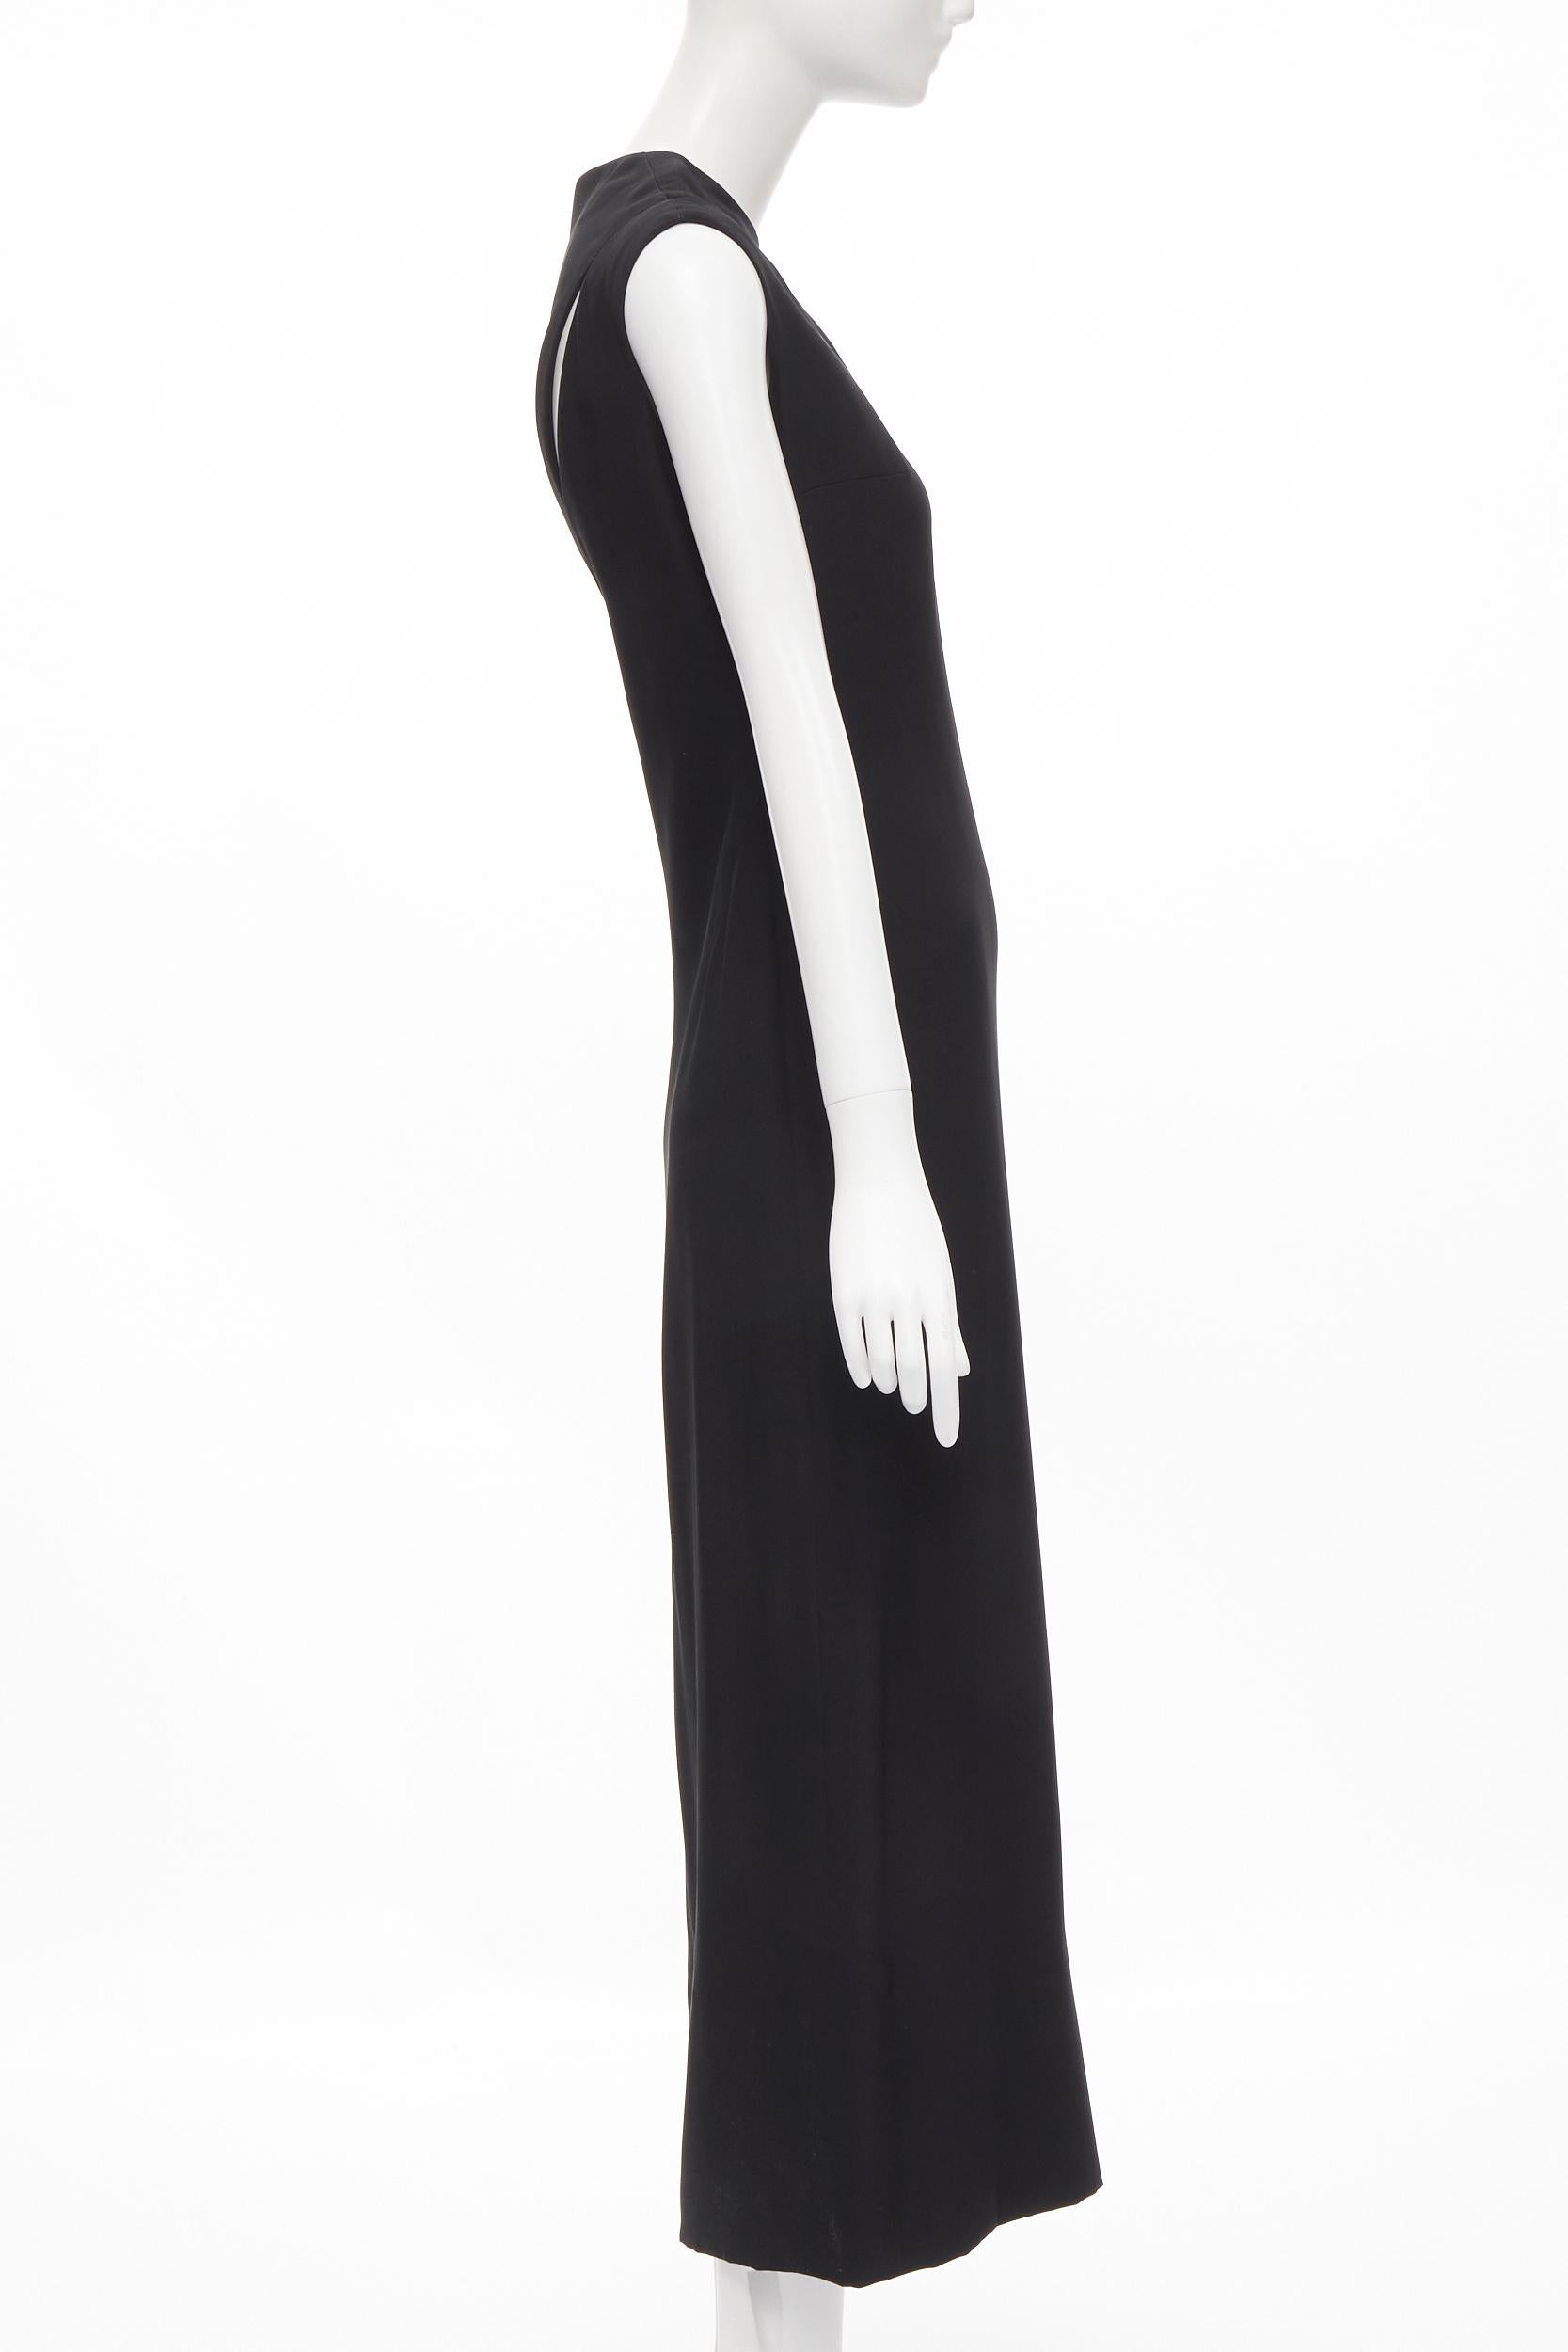 MADAME GRES Haute Couture Paris 1972 black crepe slash slit cut out dress M In Excellent Condition For Sale In Hong Kong, NT